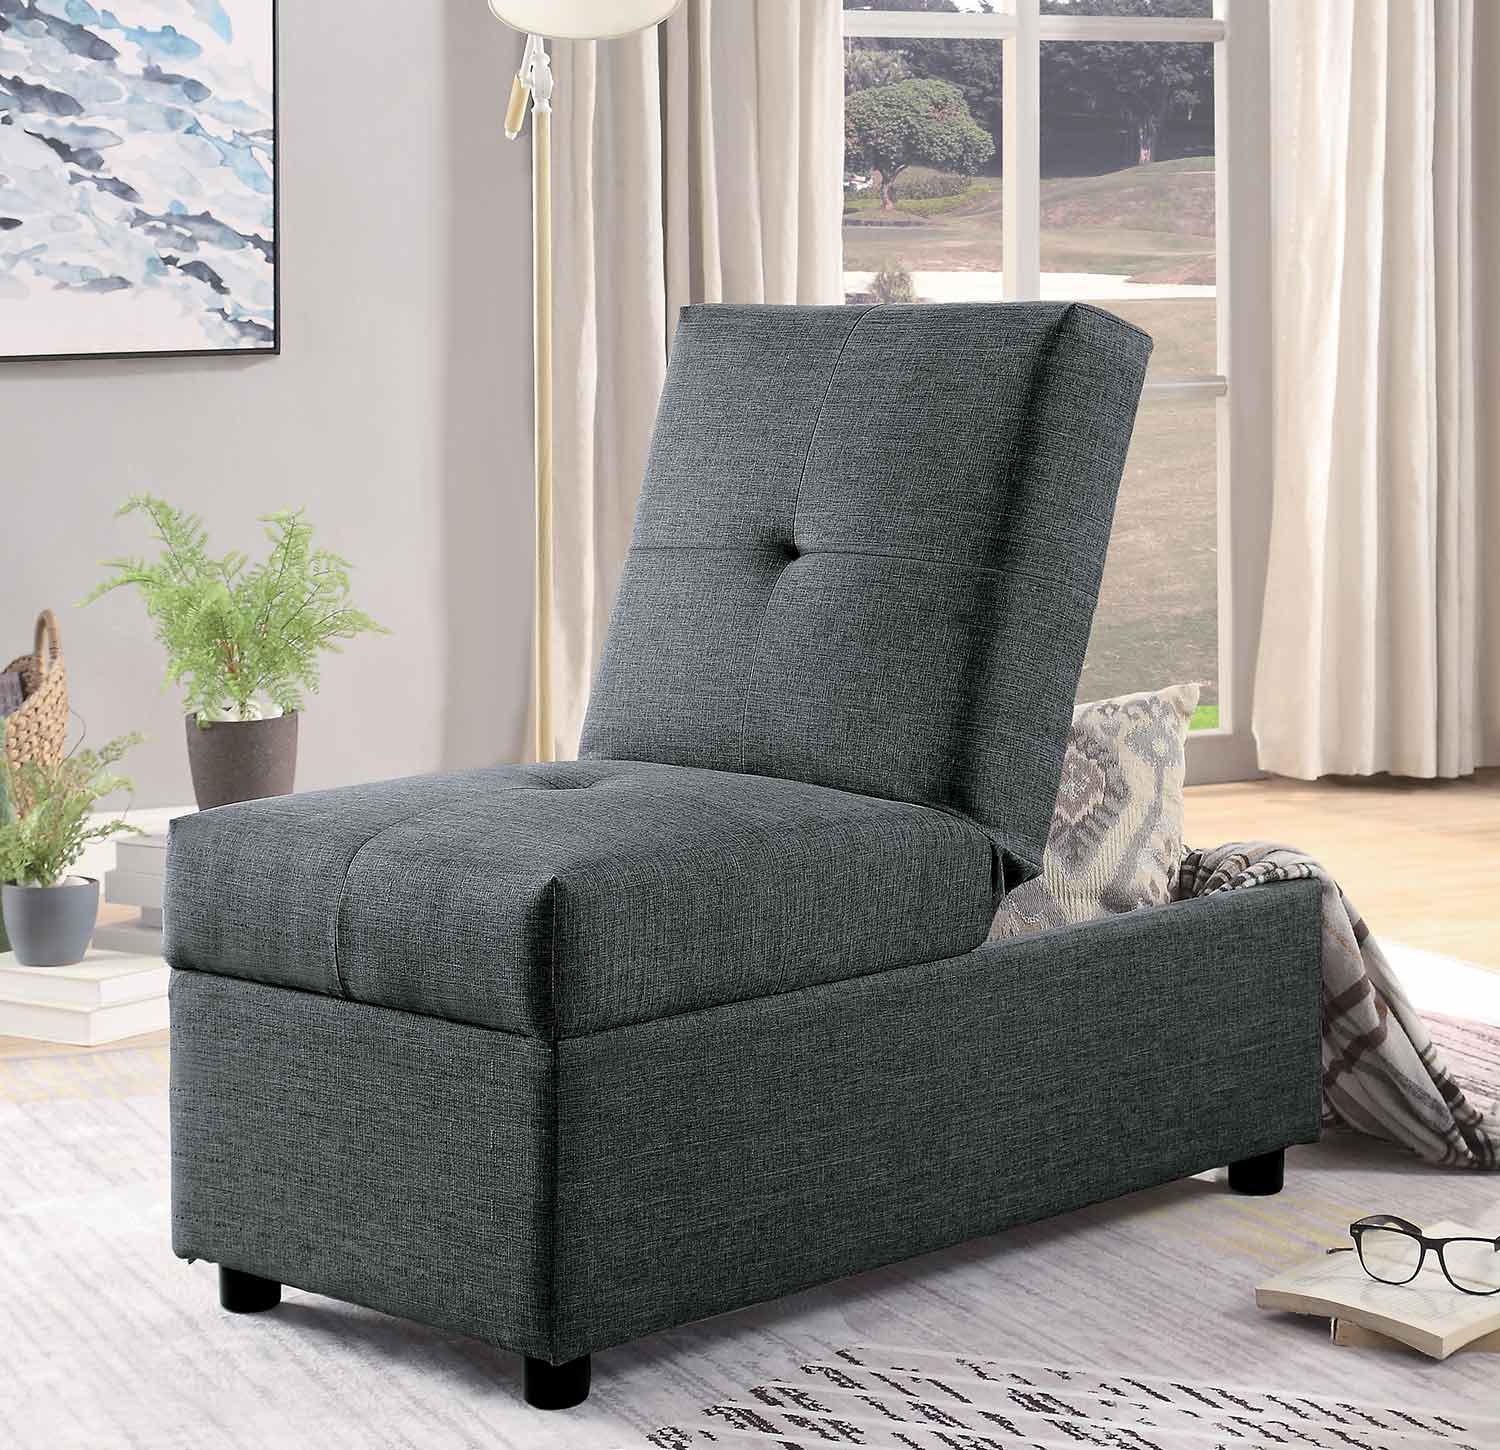 Homelegance Denby Storage Ottoman/Chair - Gray